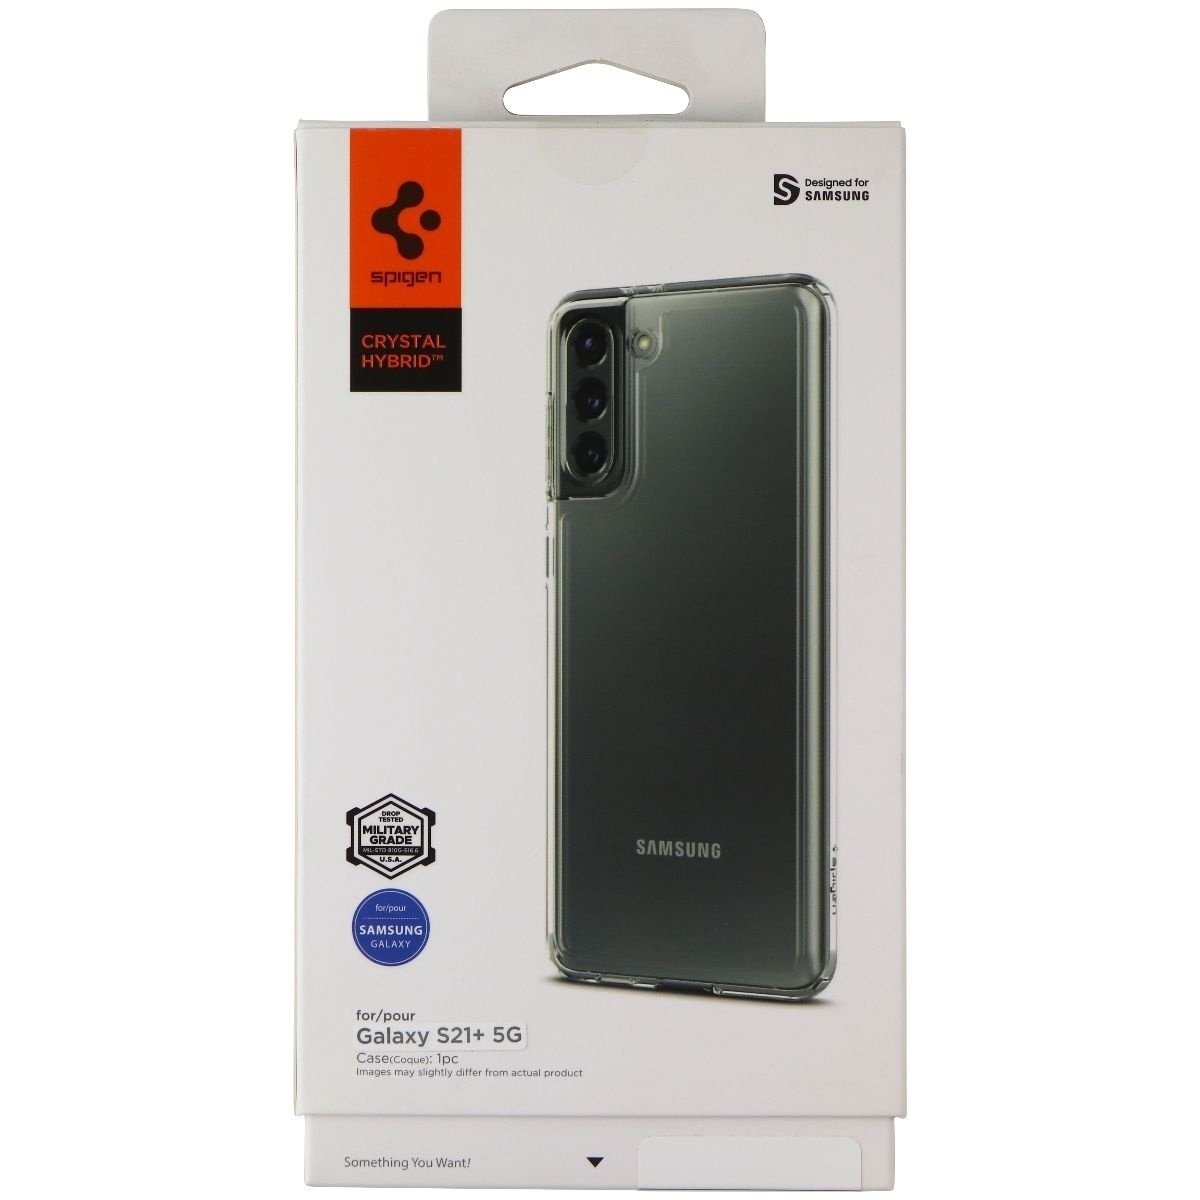 Spigen Crystal Hybrid Series Case For Samsung Galaxy S21+ 5G - Clear